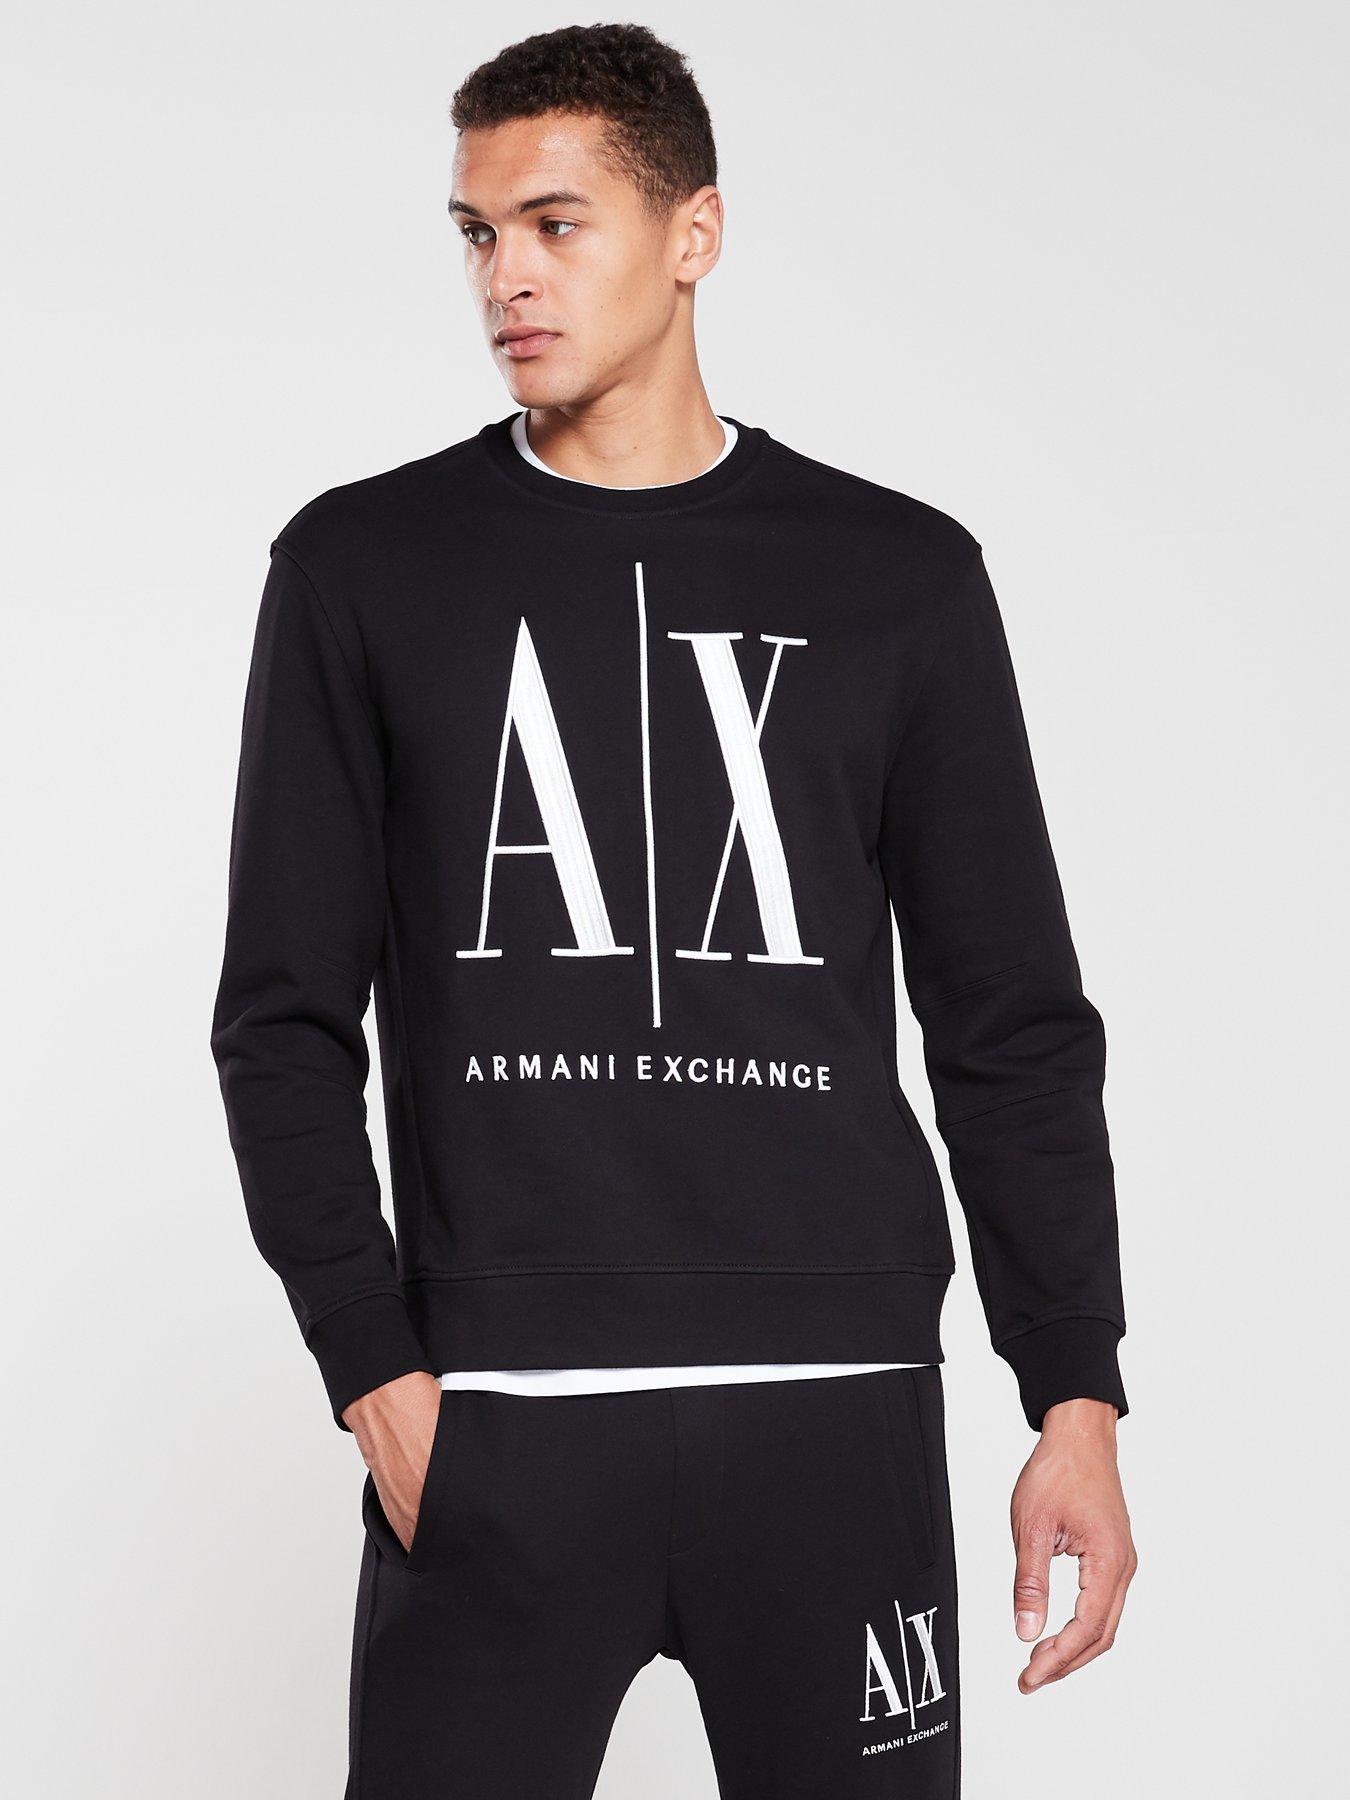 Introducir 60+ imagen armani exchange logo sweatshirt